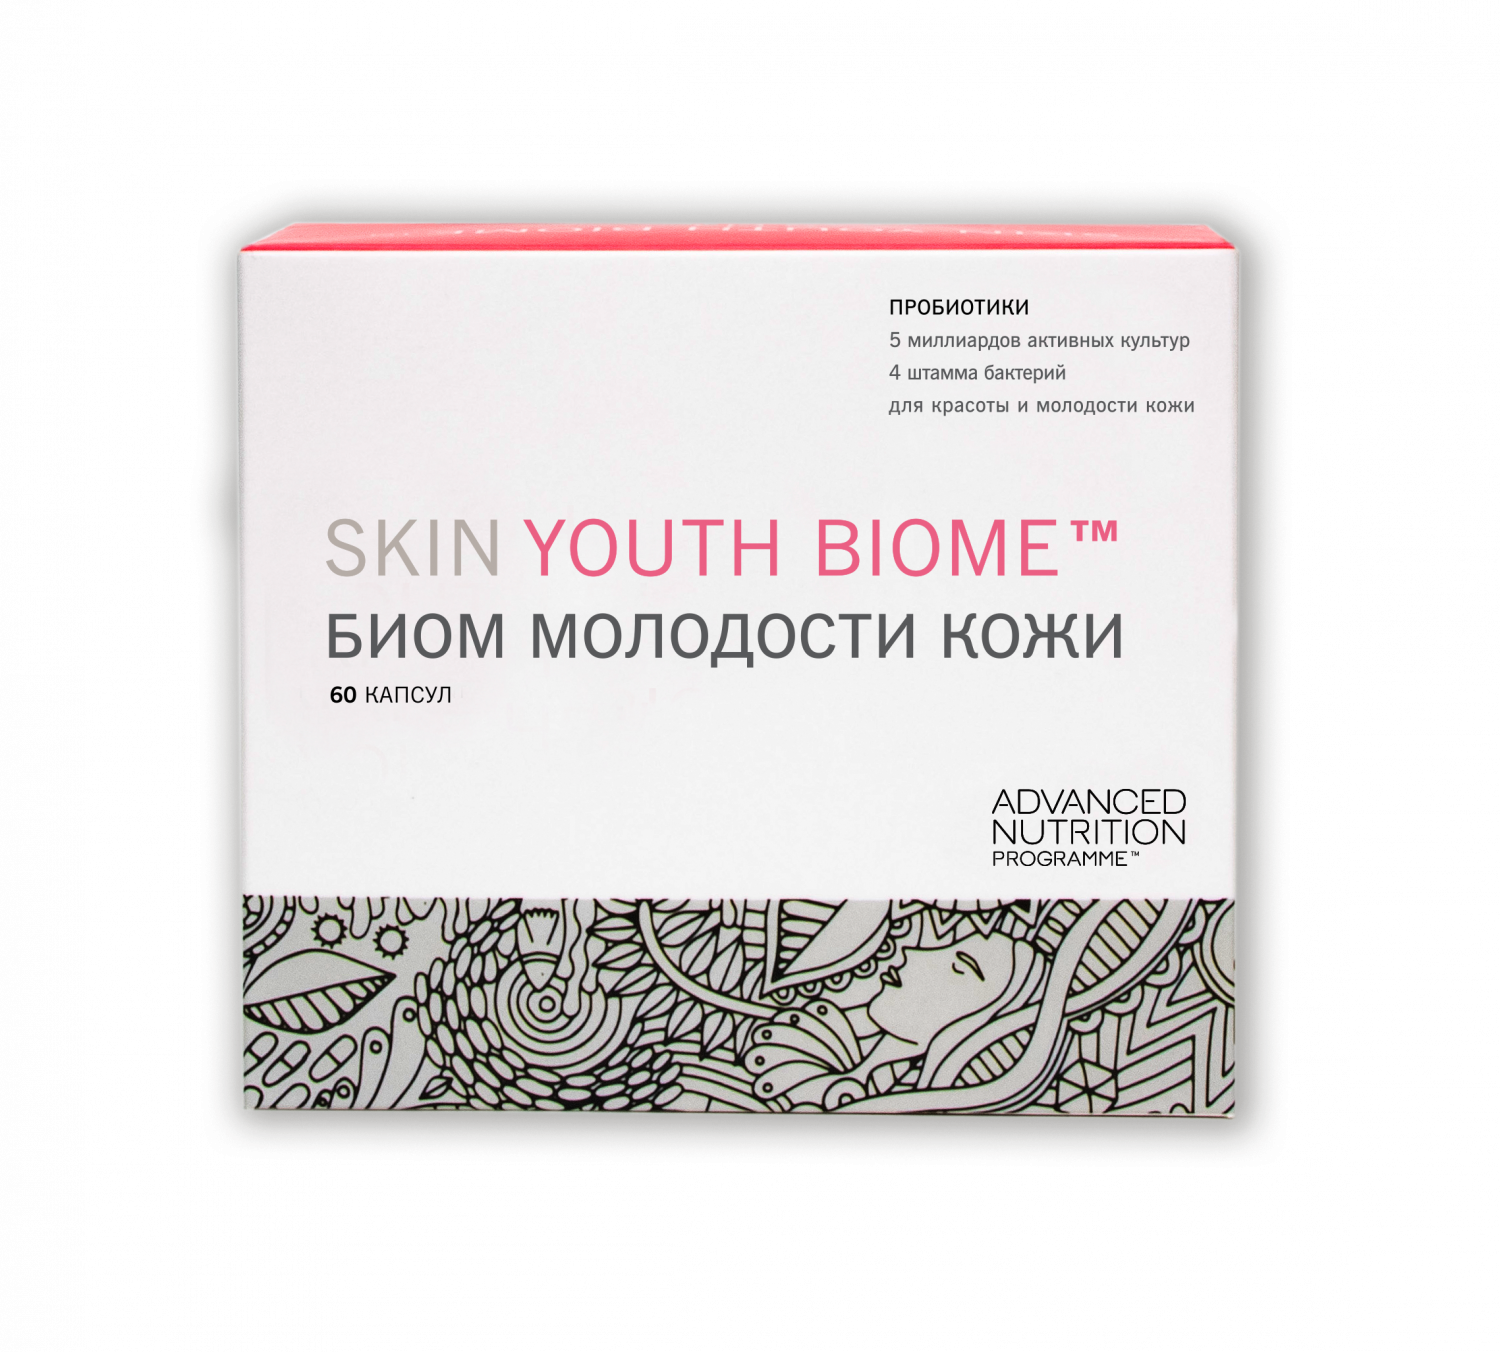 Advanced Nutrition Programme Skin Youth Biome 60 - интернет-магазин профессиональной косметики Spadream, изображение 31524